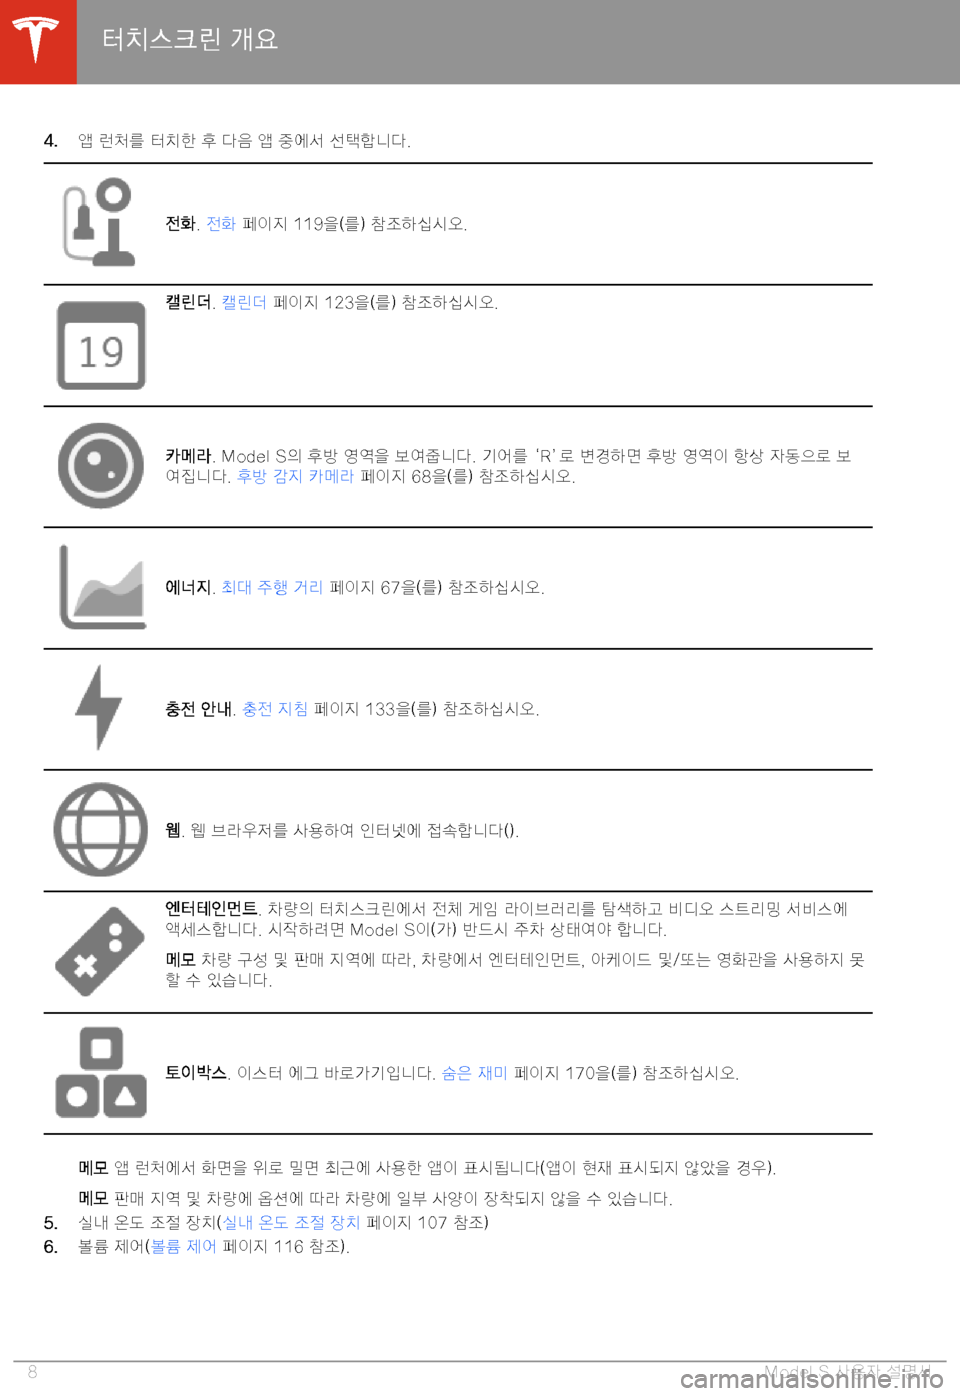 TESLA MODEL S 2020  사용자 가이드 (in Korean) �4�.q� -